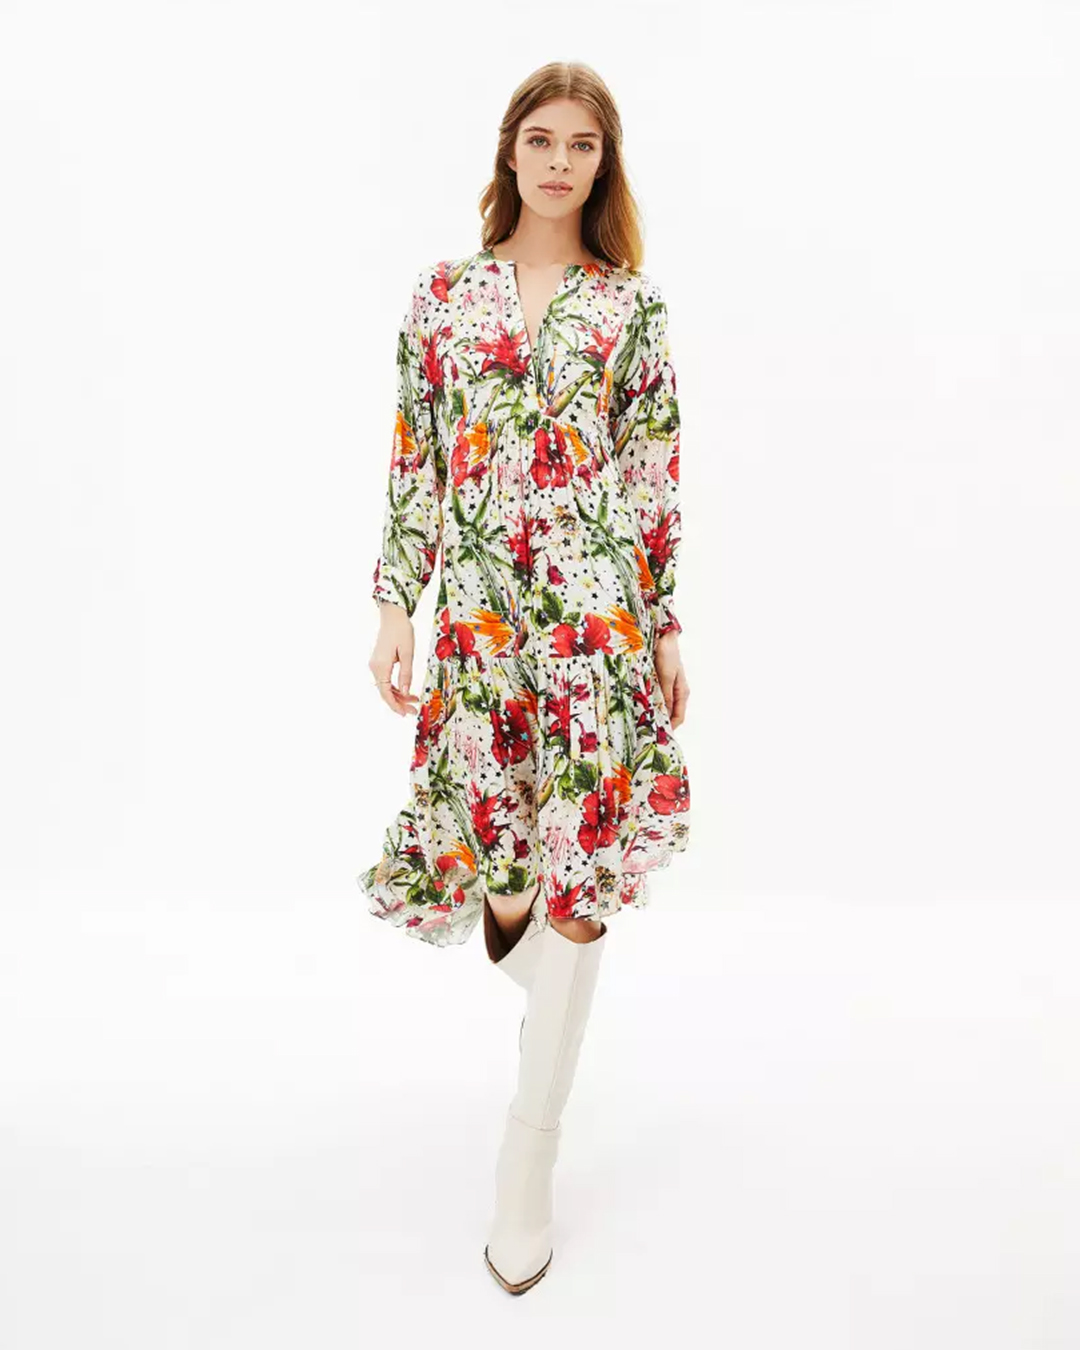 Floral midi dress design to brighten up your fashion closet